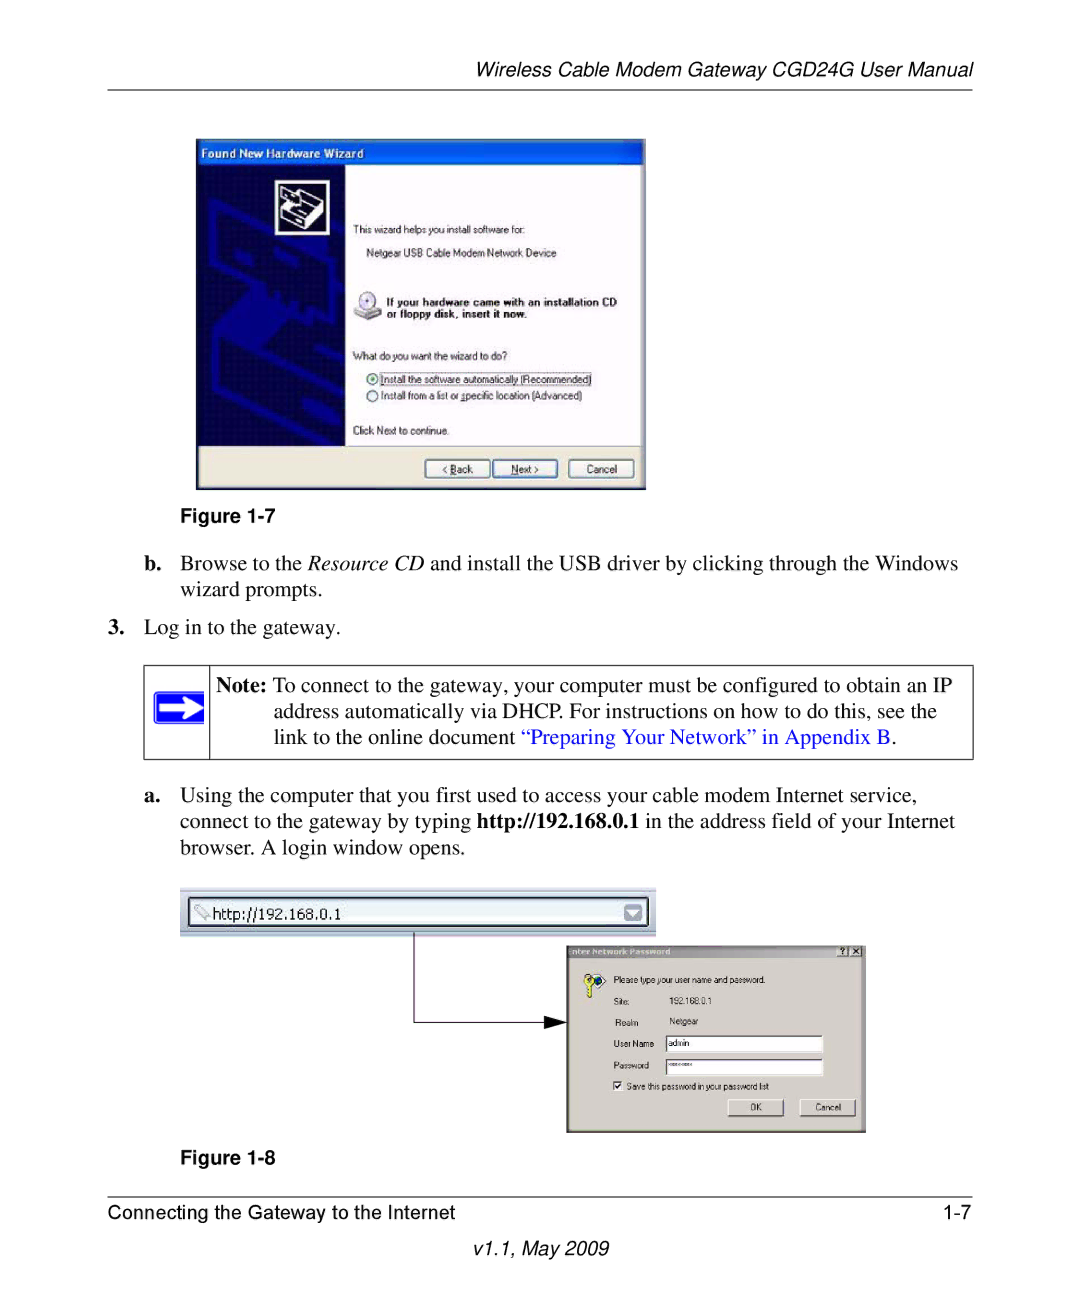 Gateway CGD24G user manual V1.1, May 